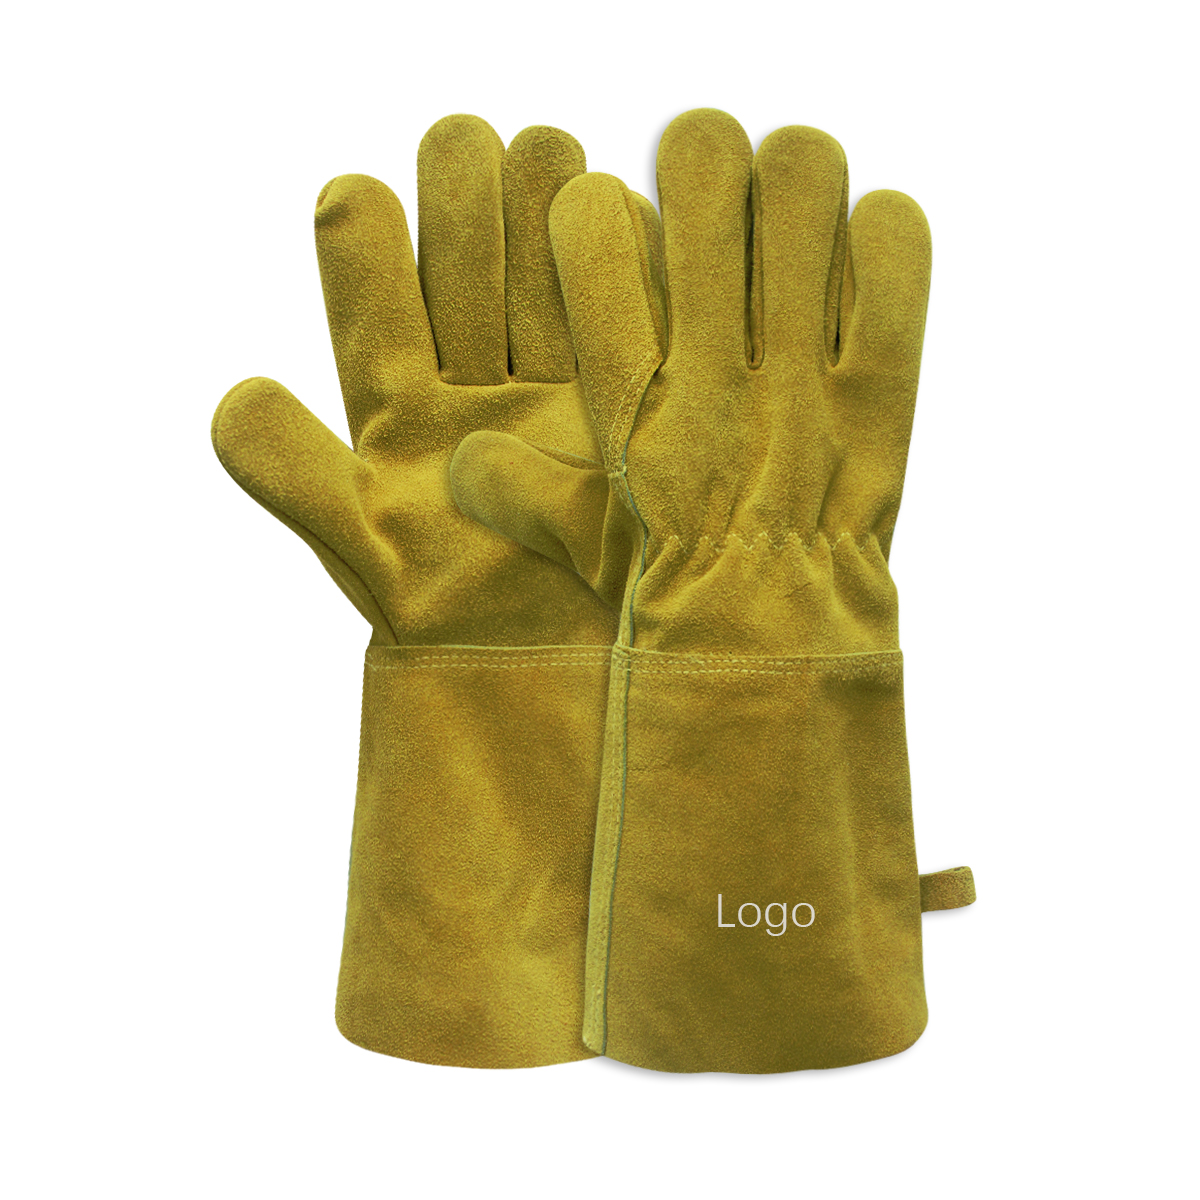 Mig Welding Welder Tig Gloves Guantes De Soldadura Product Cowhide Leather Bagong Fire Proof